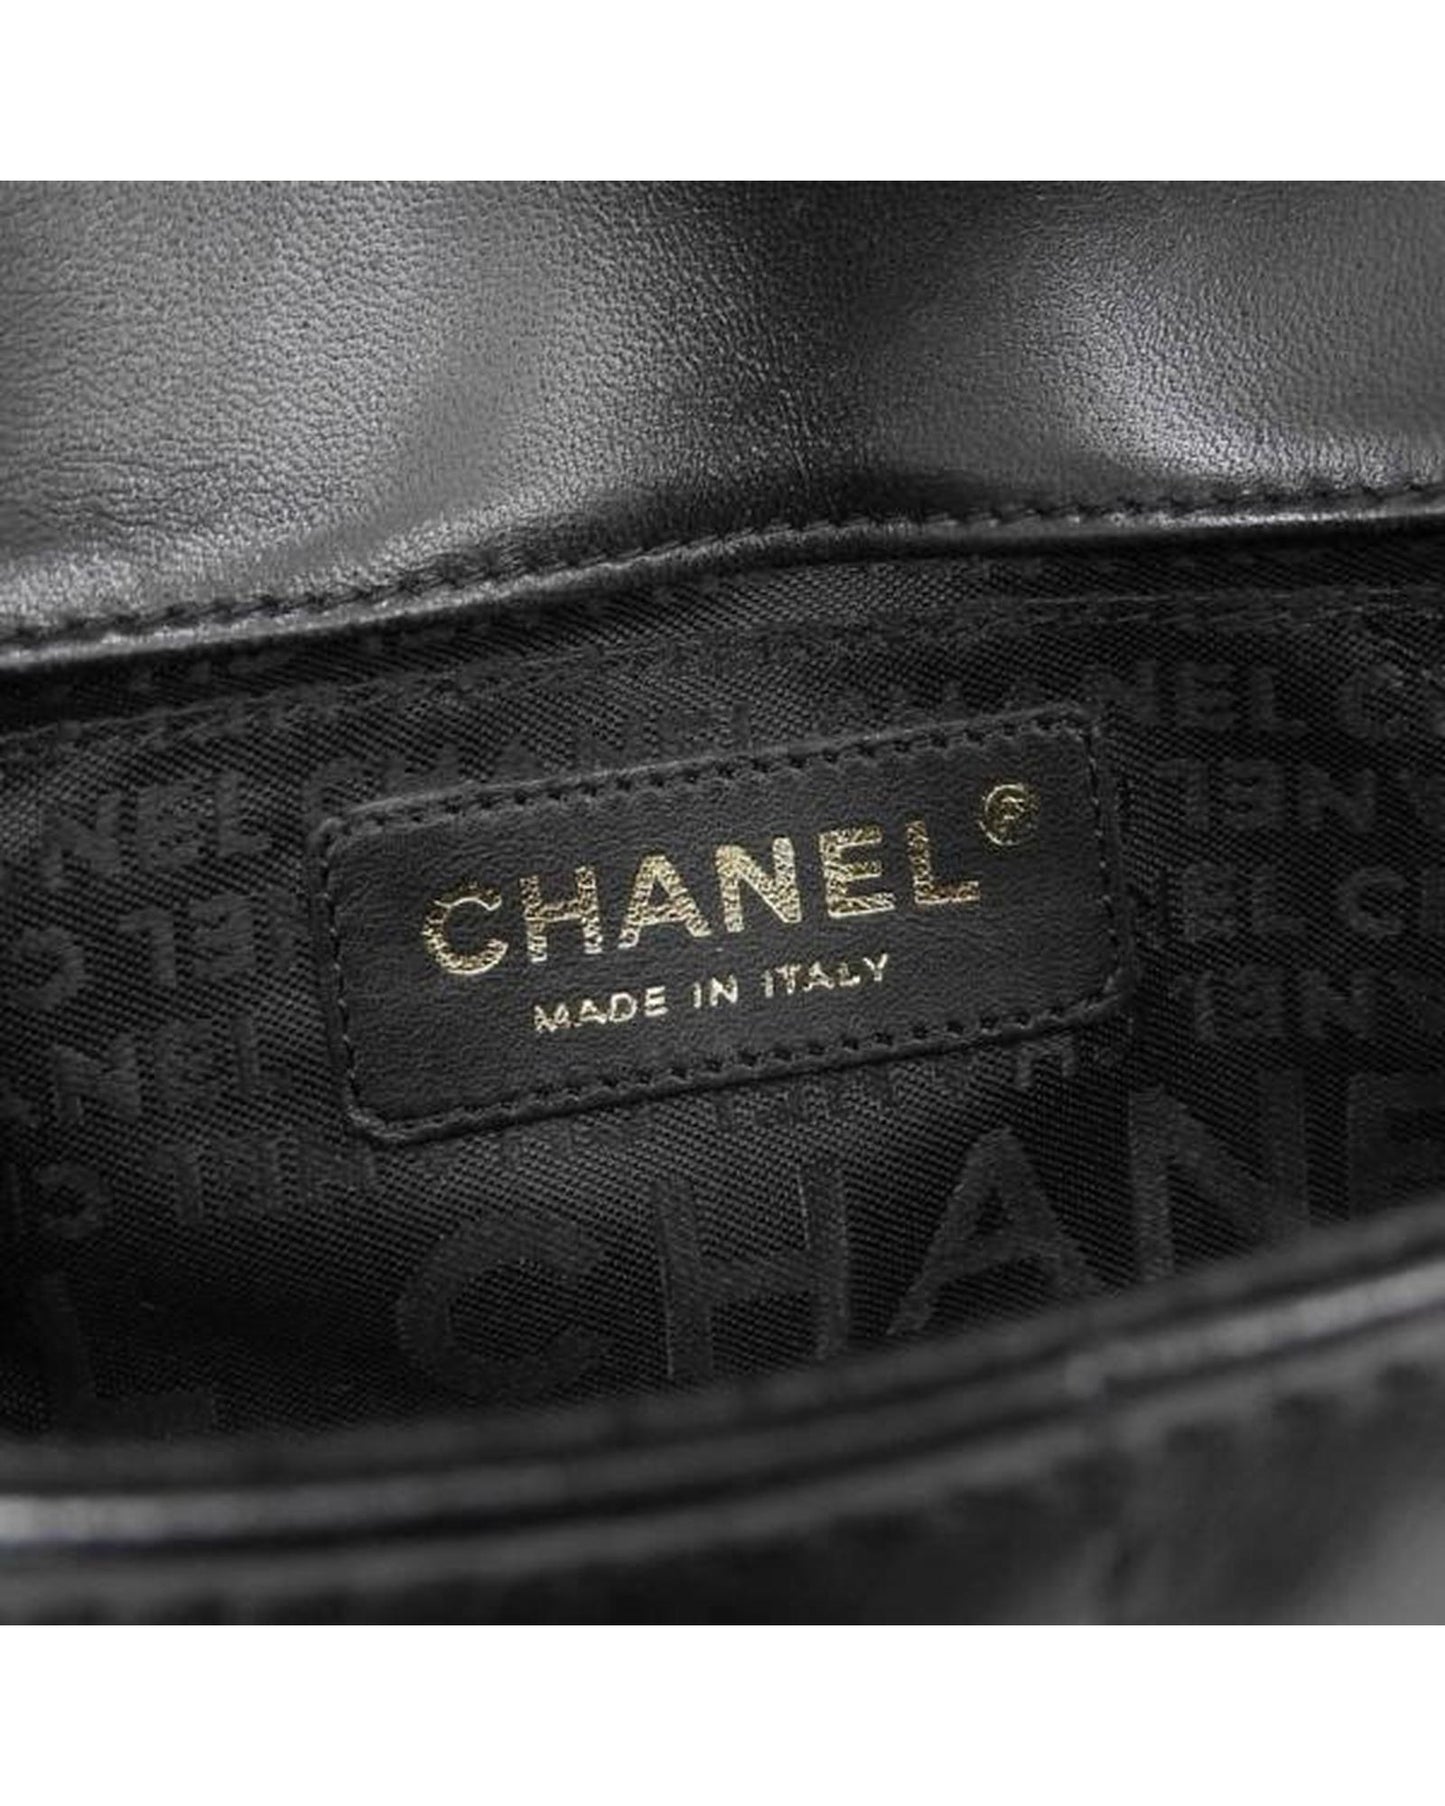 Chanel Women's Camellia Chain Bag in Black in Black